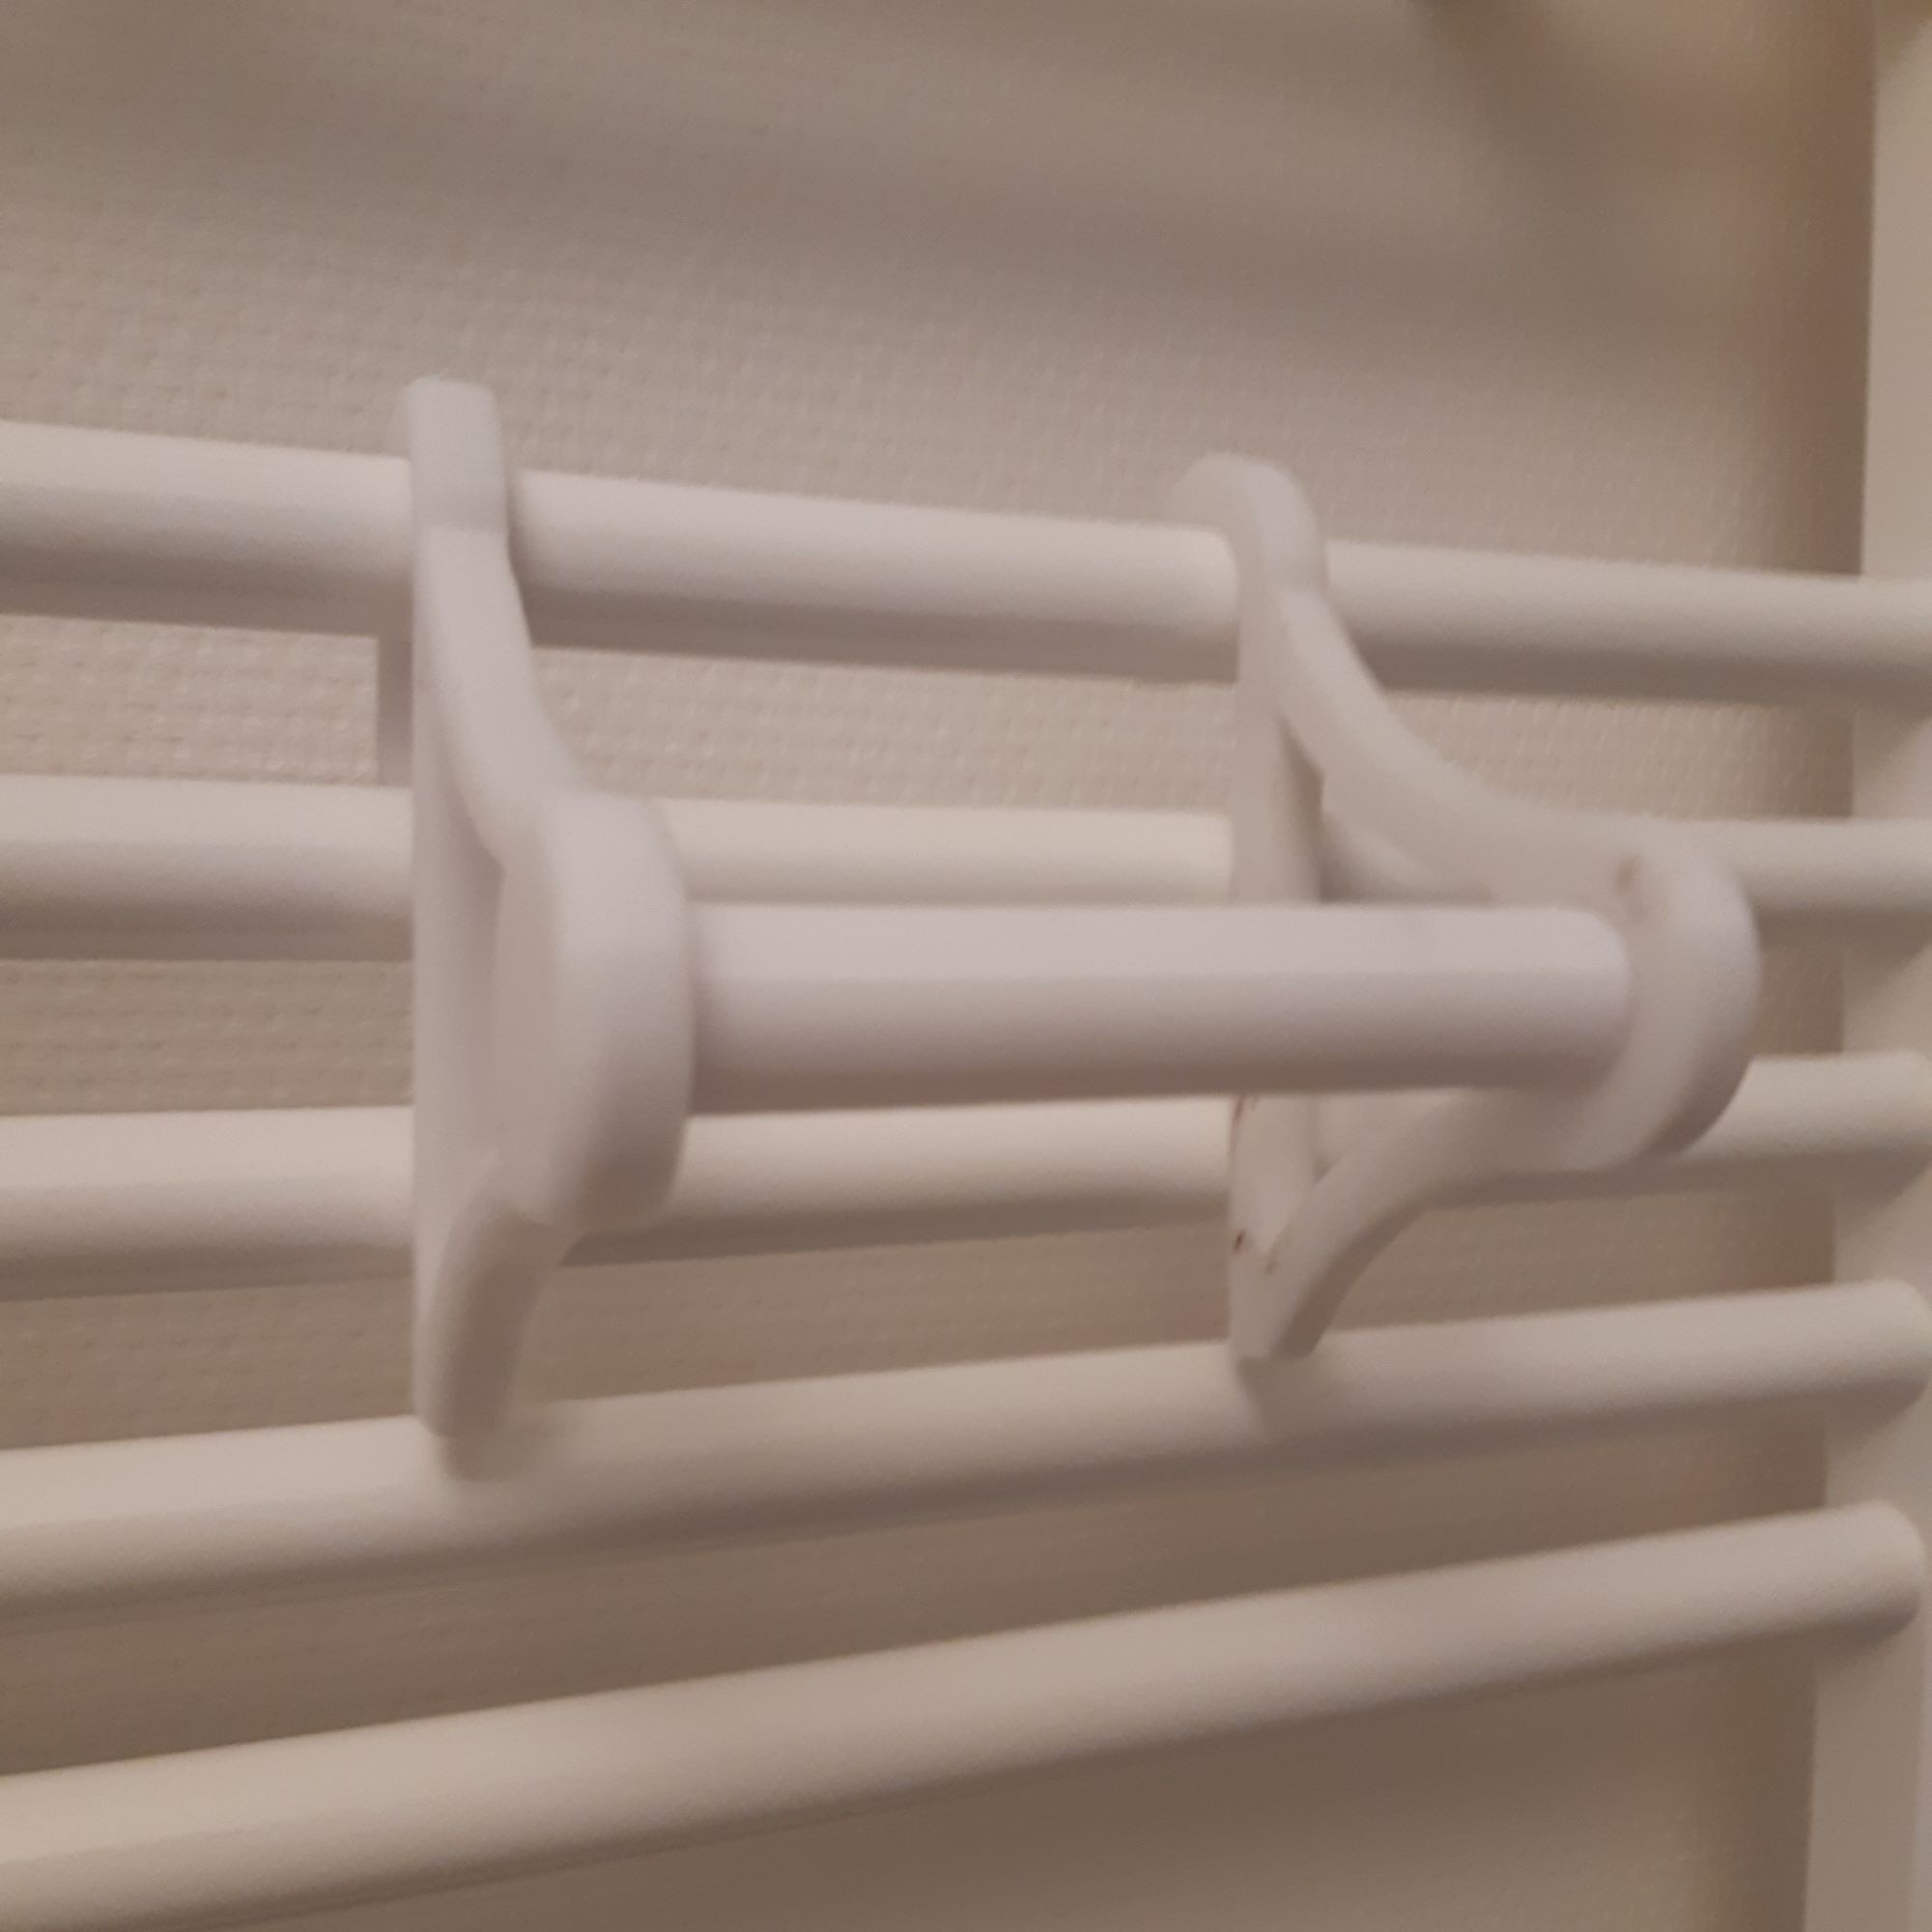 4.jpg Download STL file Toilet paper holder • 3D printer template, ACdesign